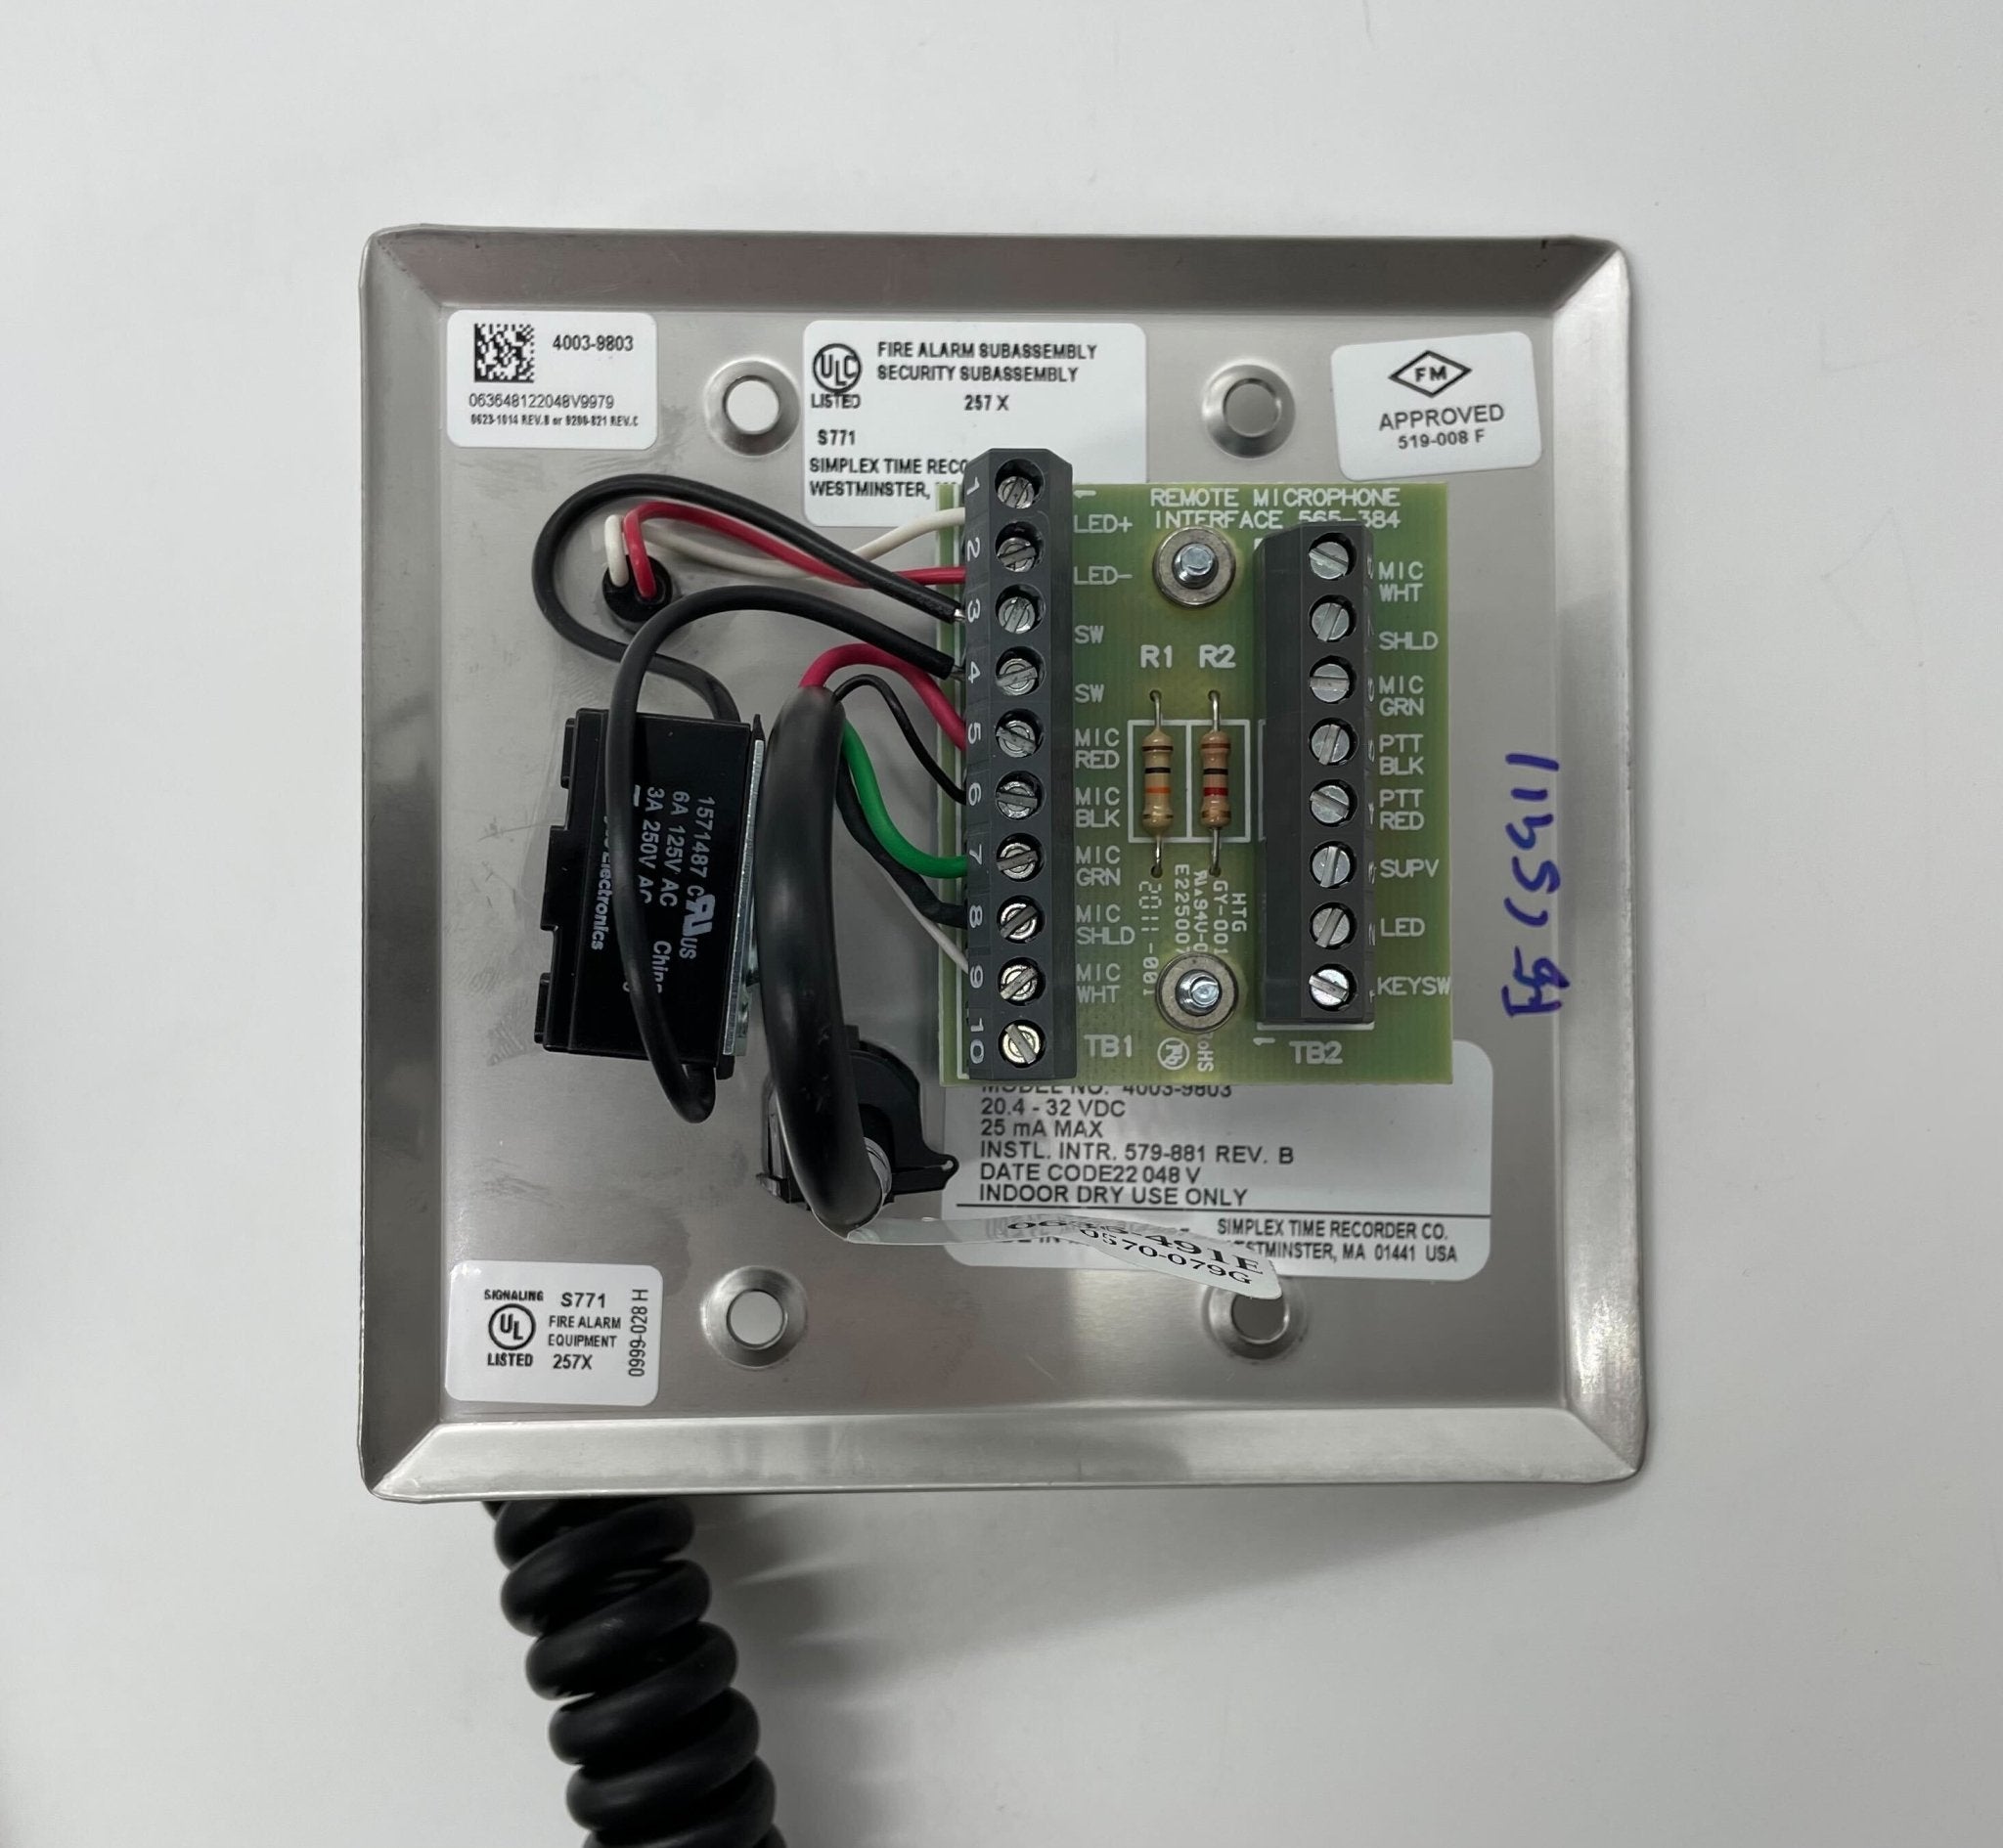 Simplex 4003-9803 - The Fire Alarm Supplier